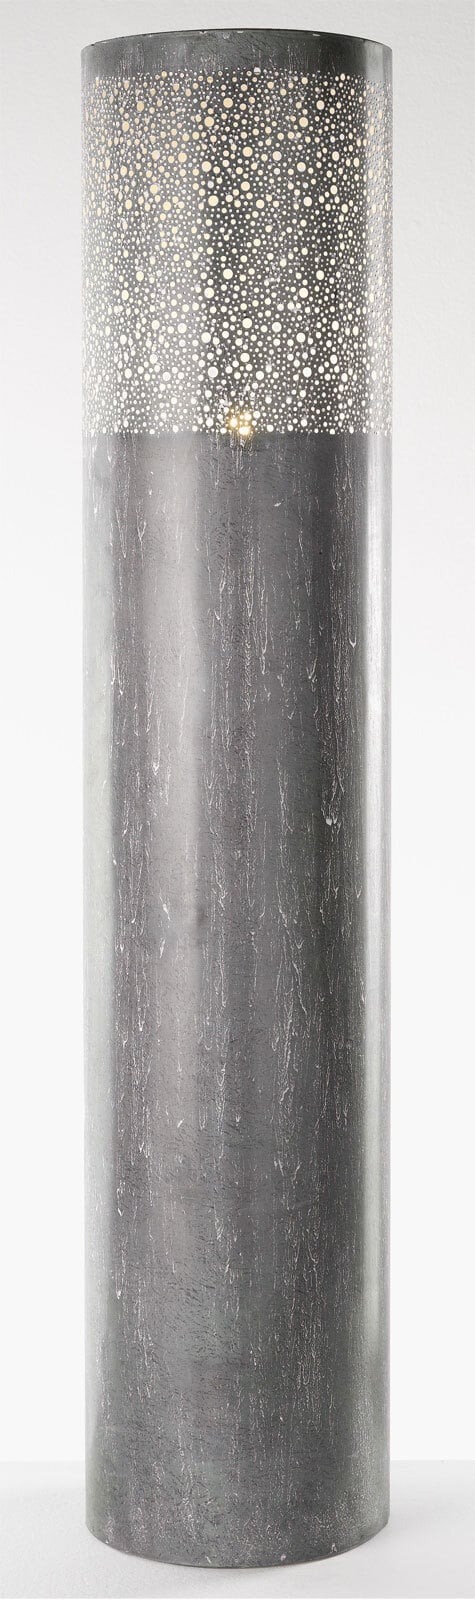 casaNOVA Retrofit Stehlampe RUSTY 125 cm